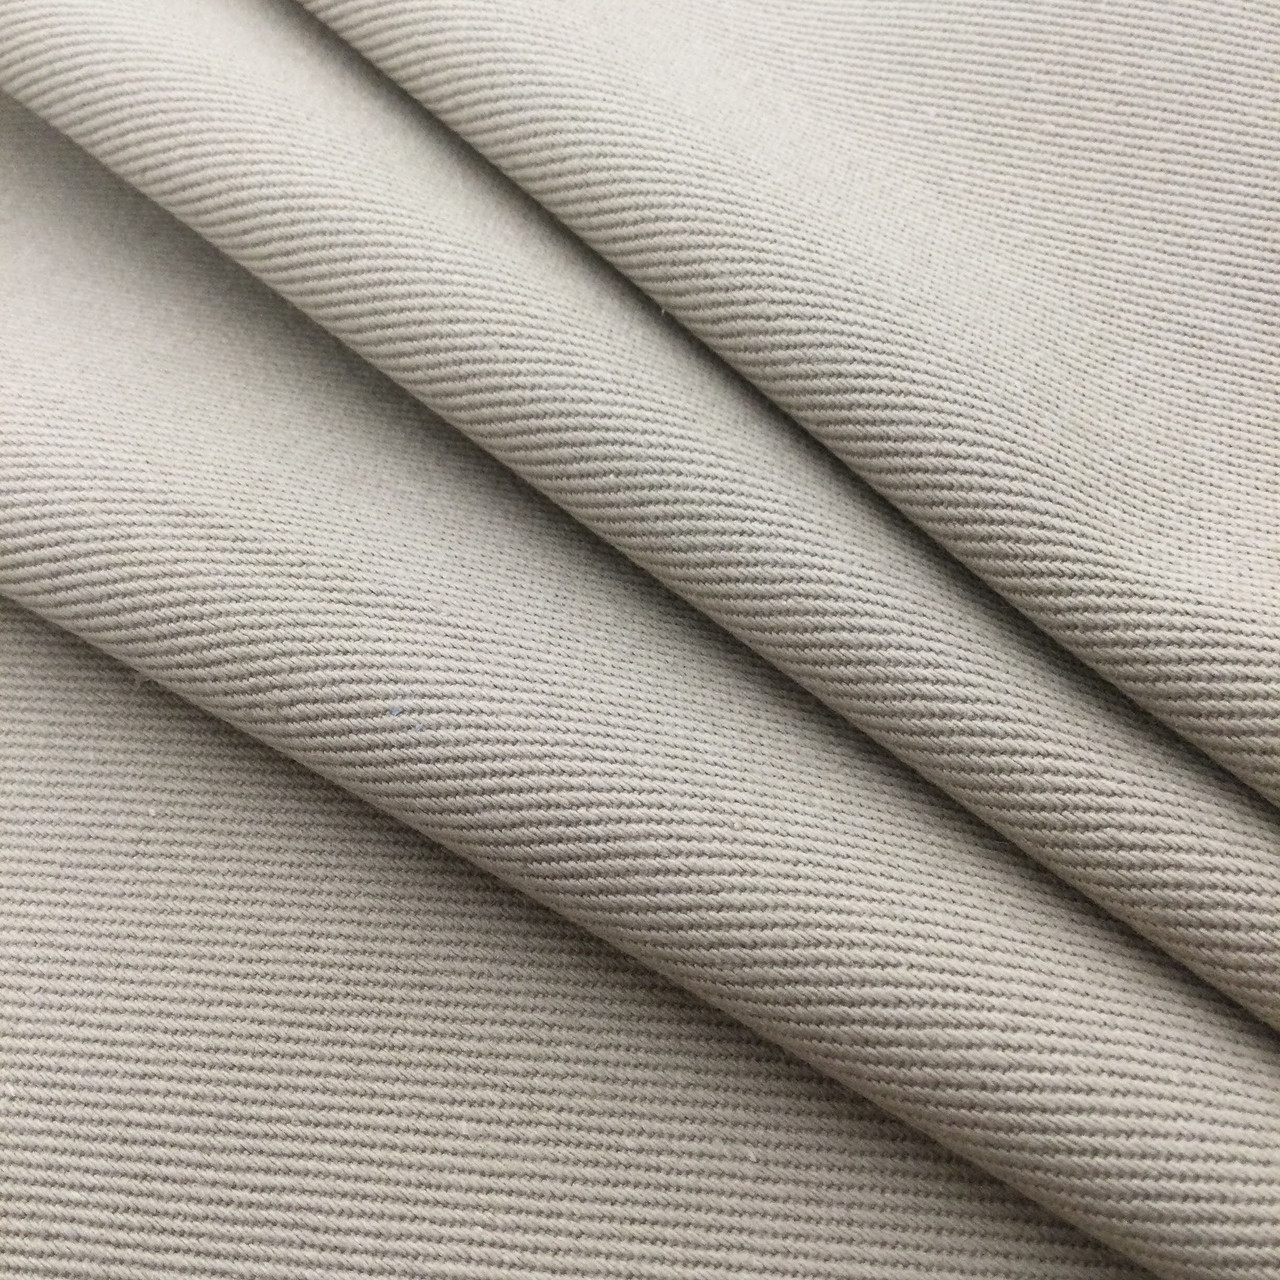 Solid Beige, Cotton Twill Fabric, 8 oz.